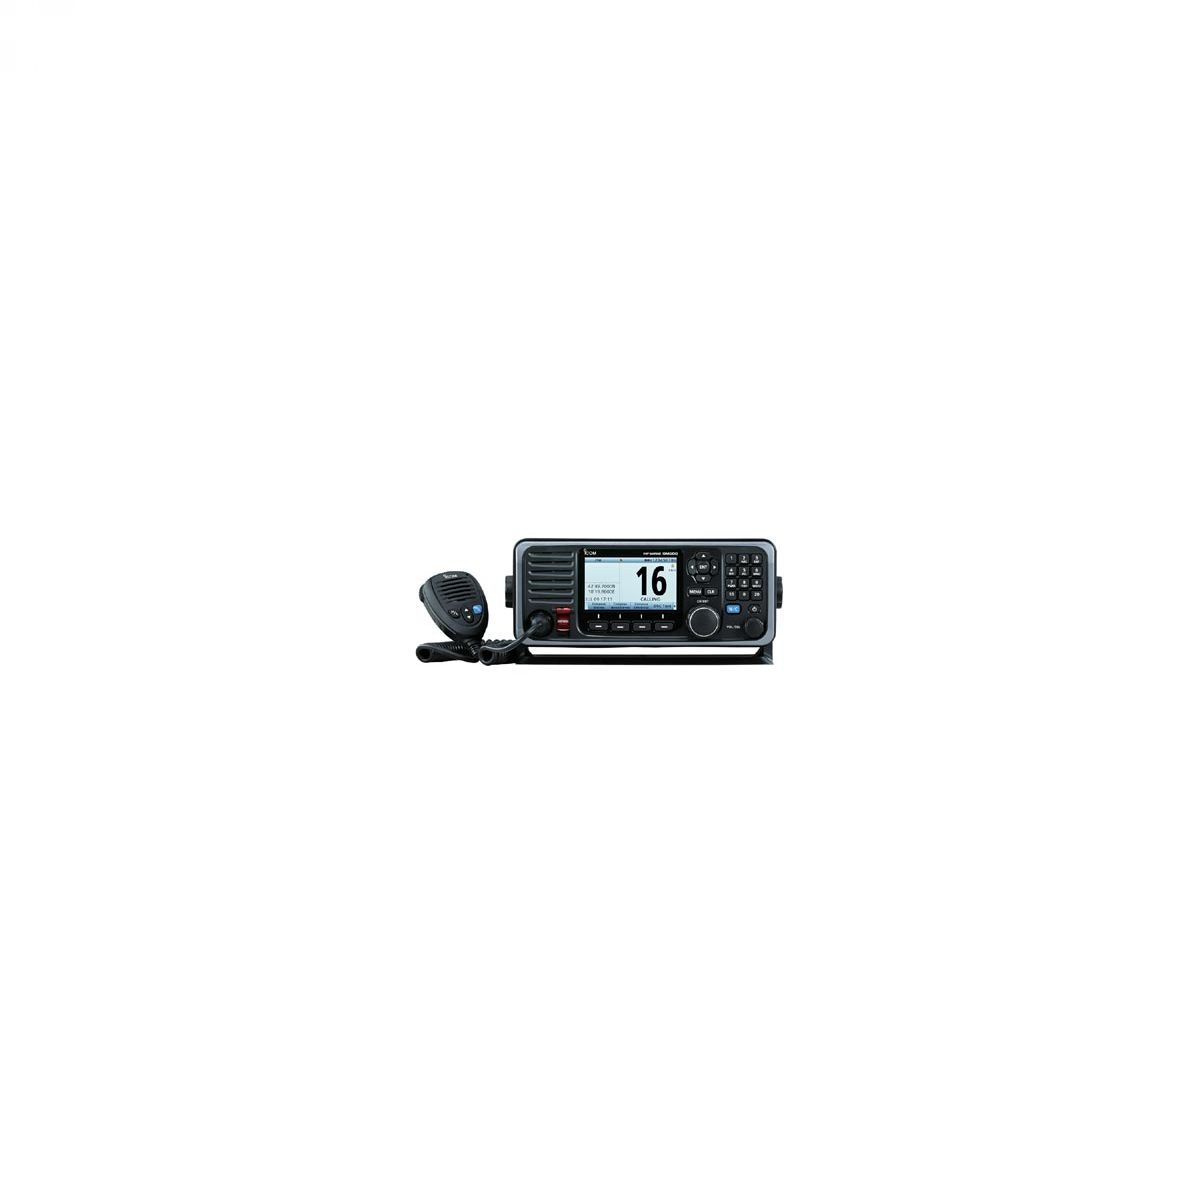 Icom GM600 VHF DSC GMDSS radijska postaja